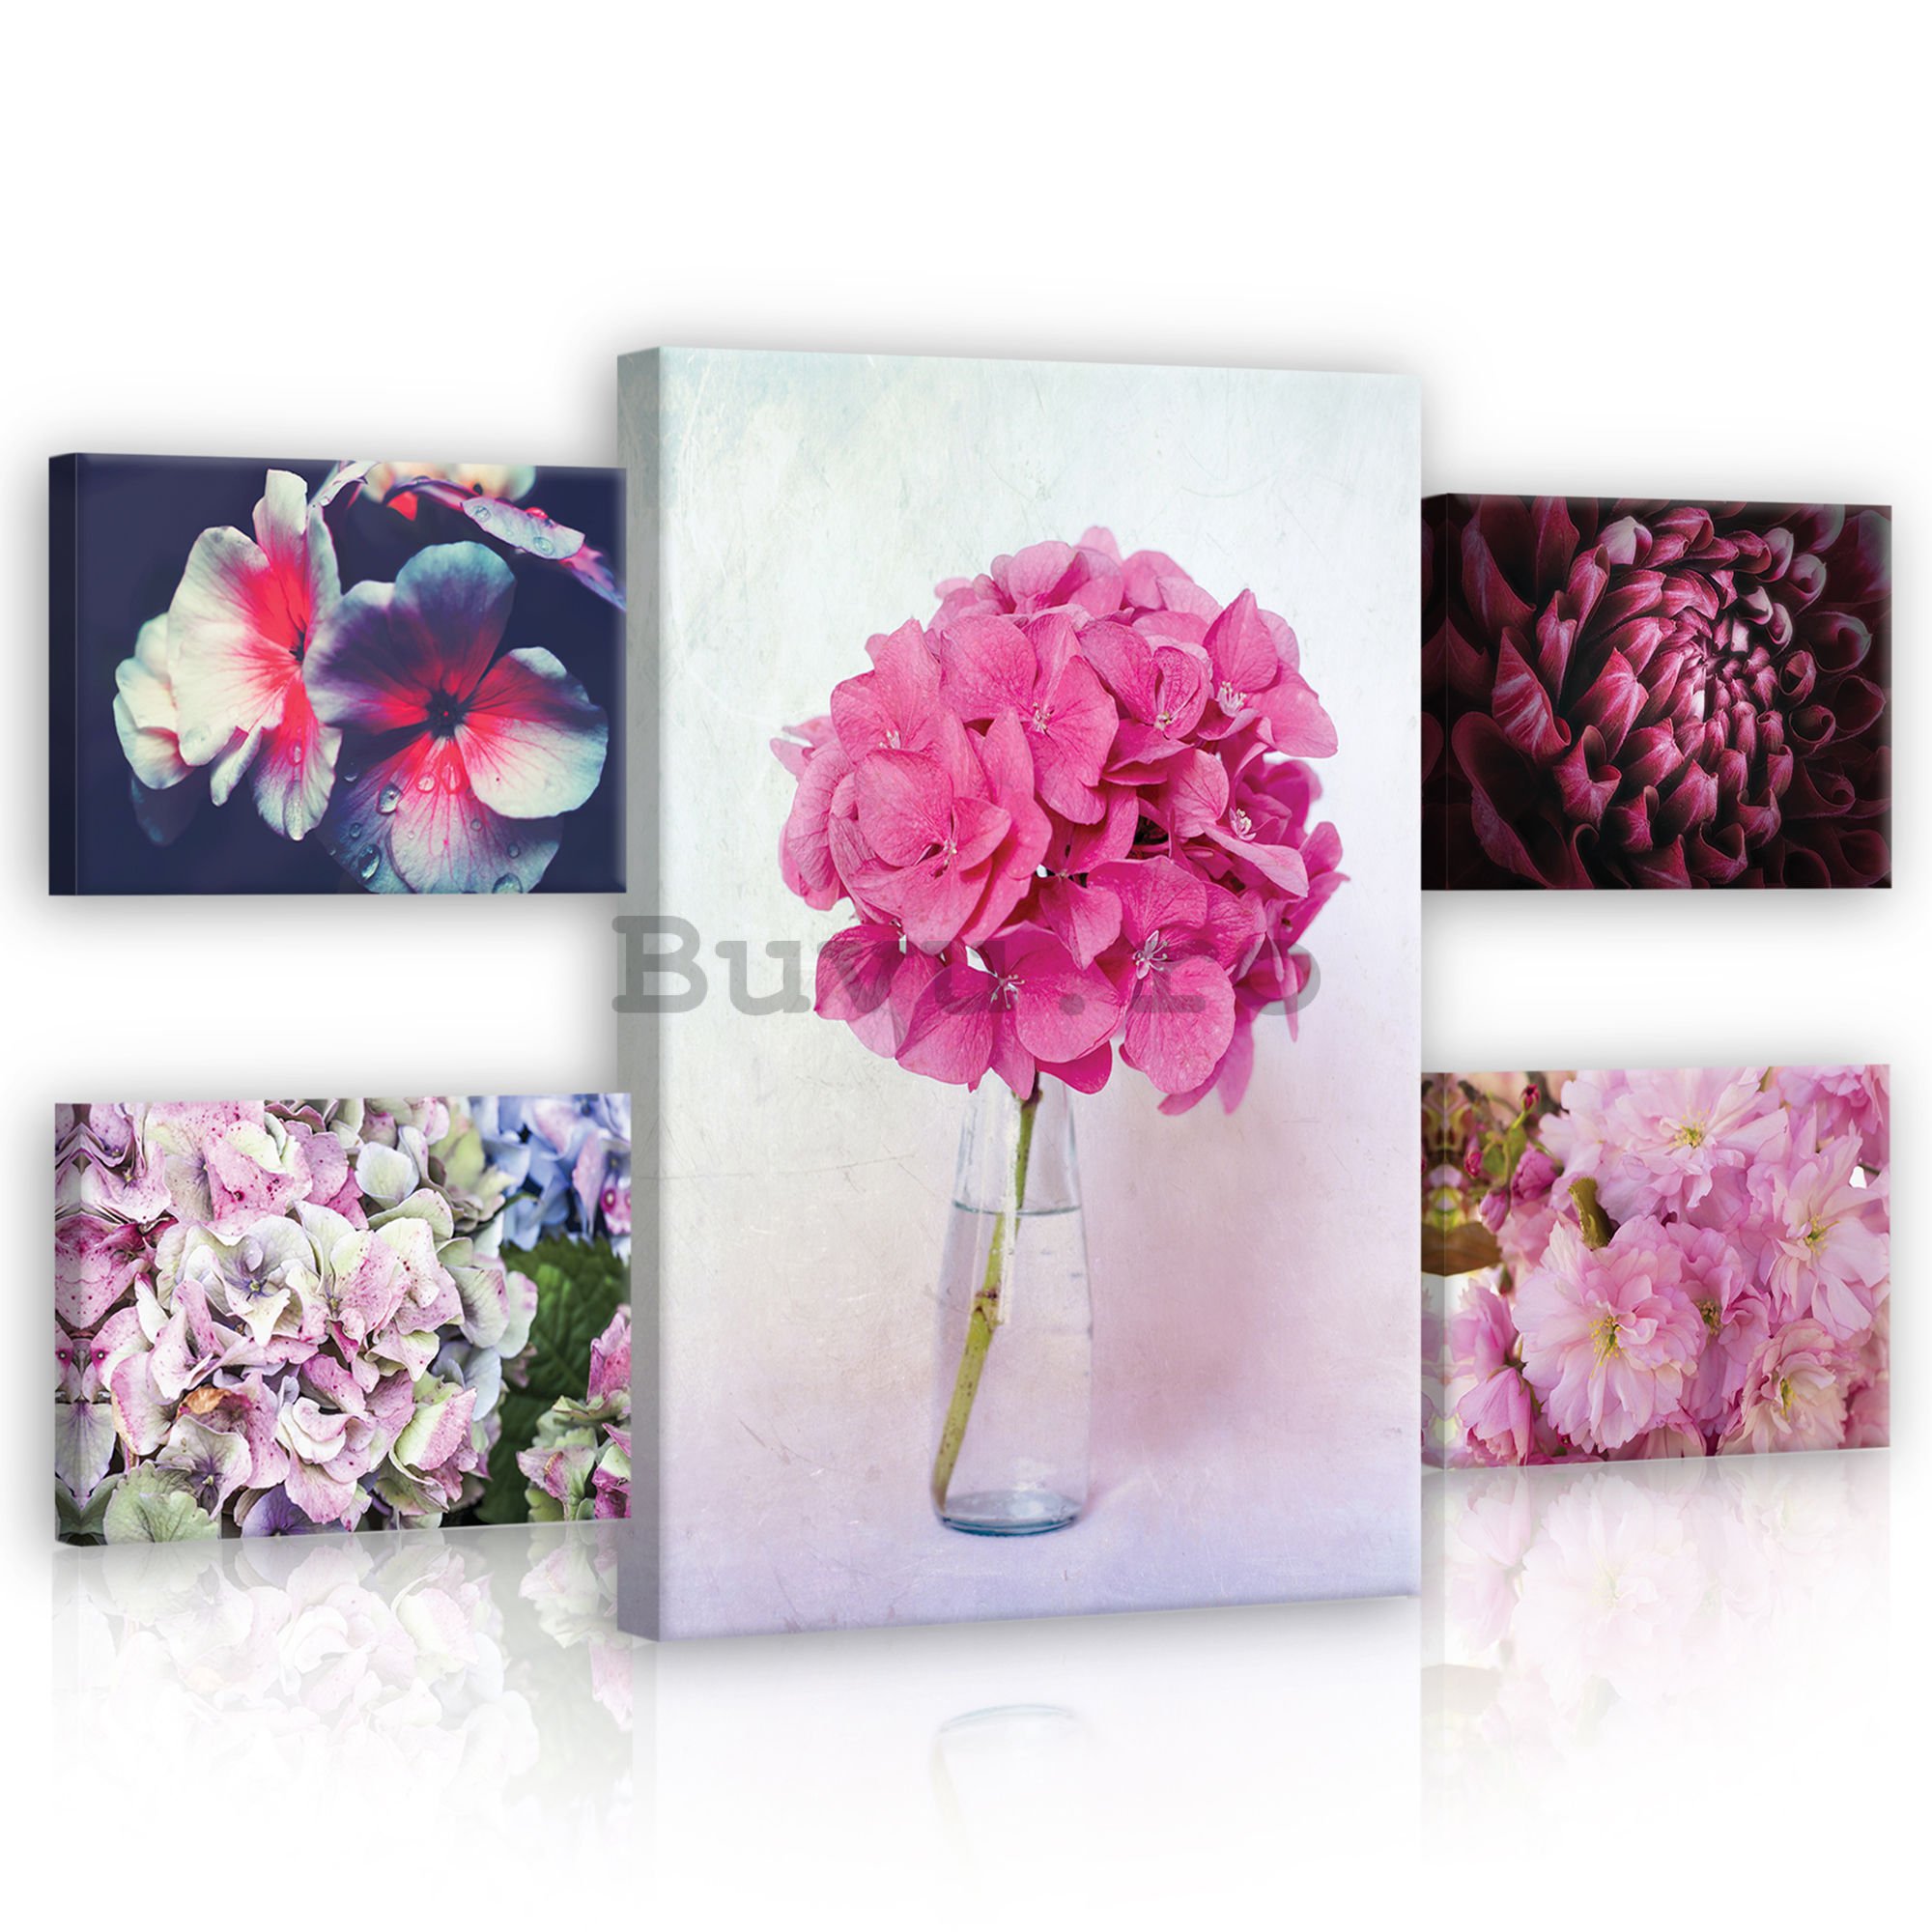 Tablou canvas: Flori roz - set 1 buc 70x50 cm și 4 buc 32,4x22,8 cm